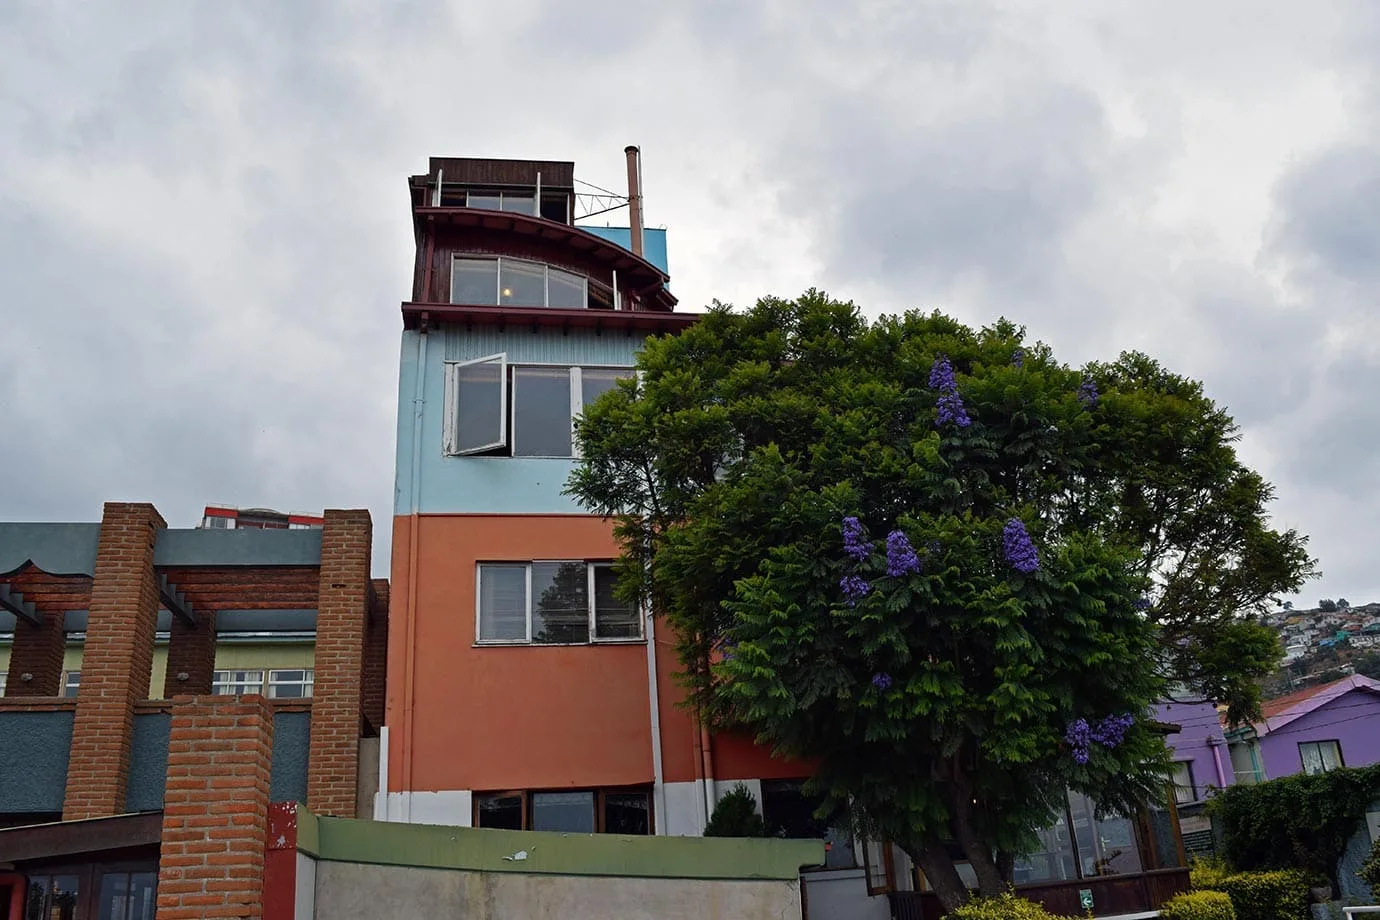 La Sebastiana, Pablo Neruda's house